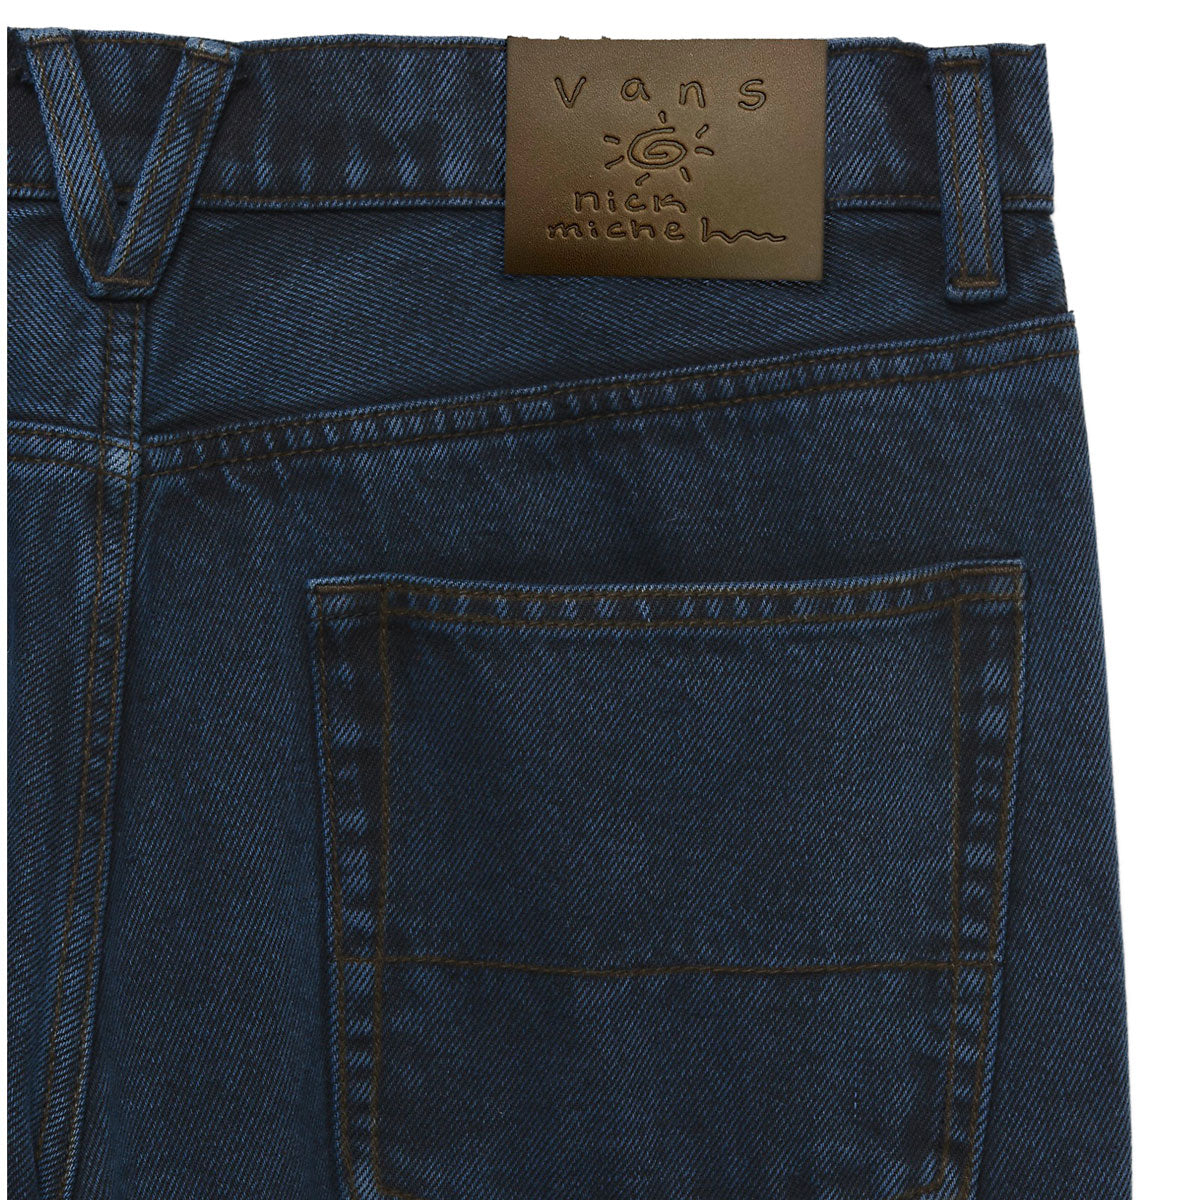 Vans Nick Michel Check-5 Loose Tapered Denim Pants - Dress Blues image 3